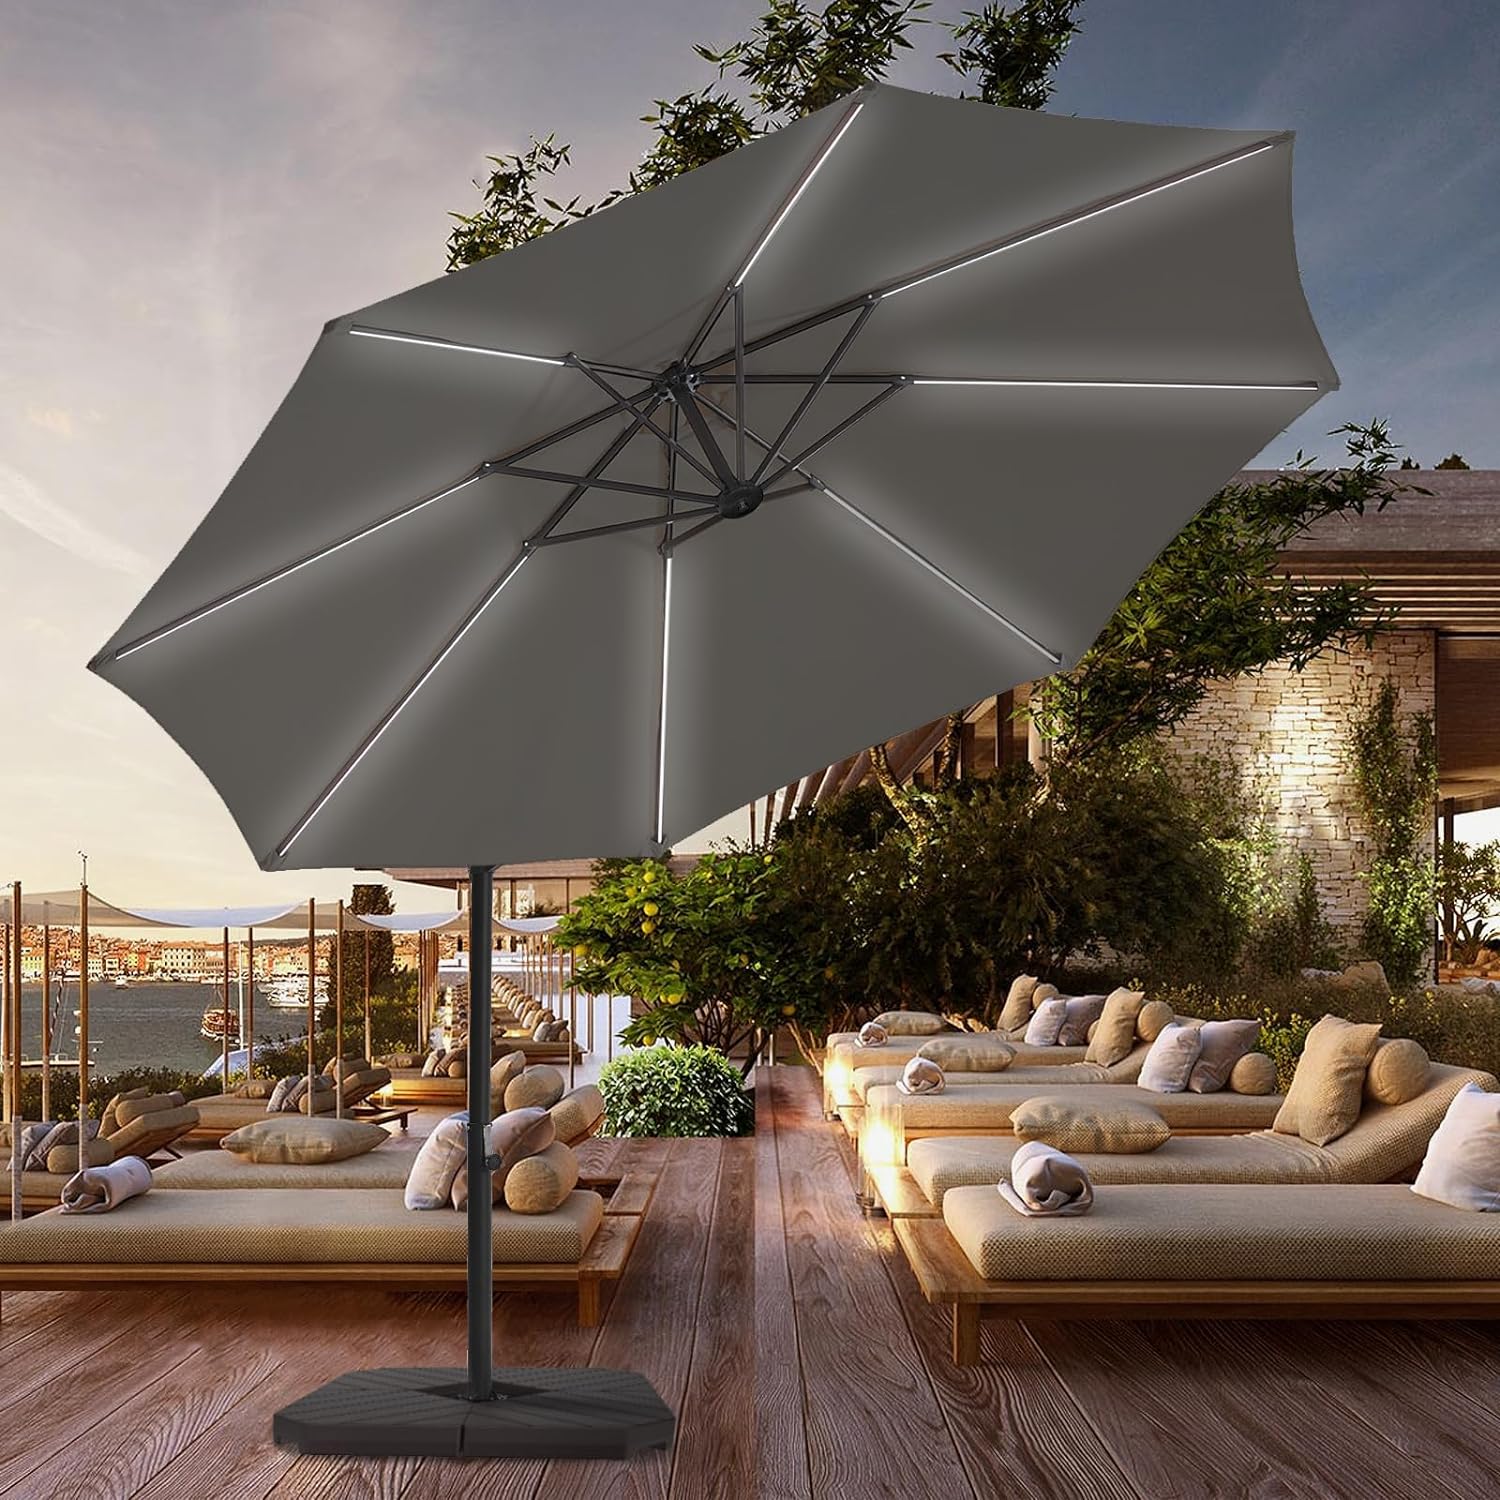 BLUU 10 FT Patio Offset Umbrella Outdoor Cantilever Umbrella Hanging Umbrellas, Fade Resistant Crank & Cross Base (Dark Grey, 10 FT WITH LIGHTS)